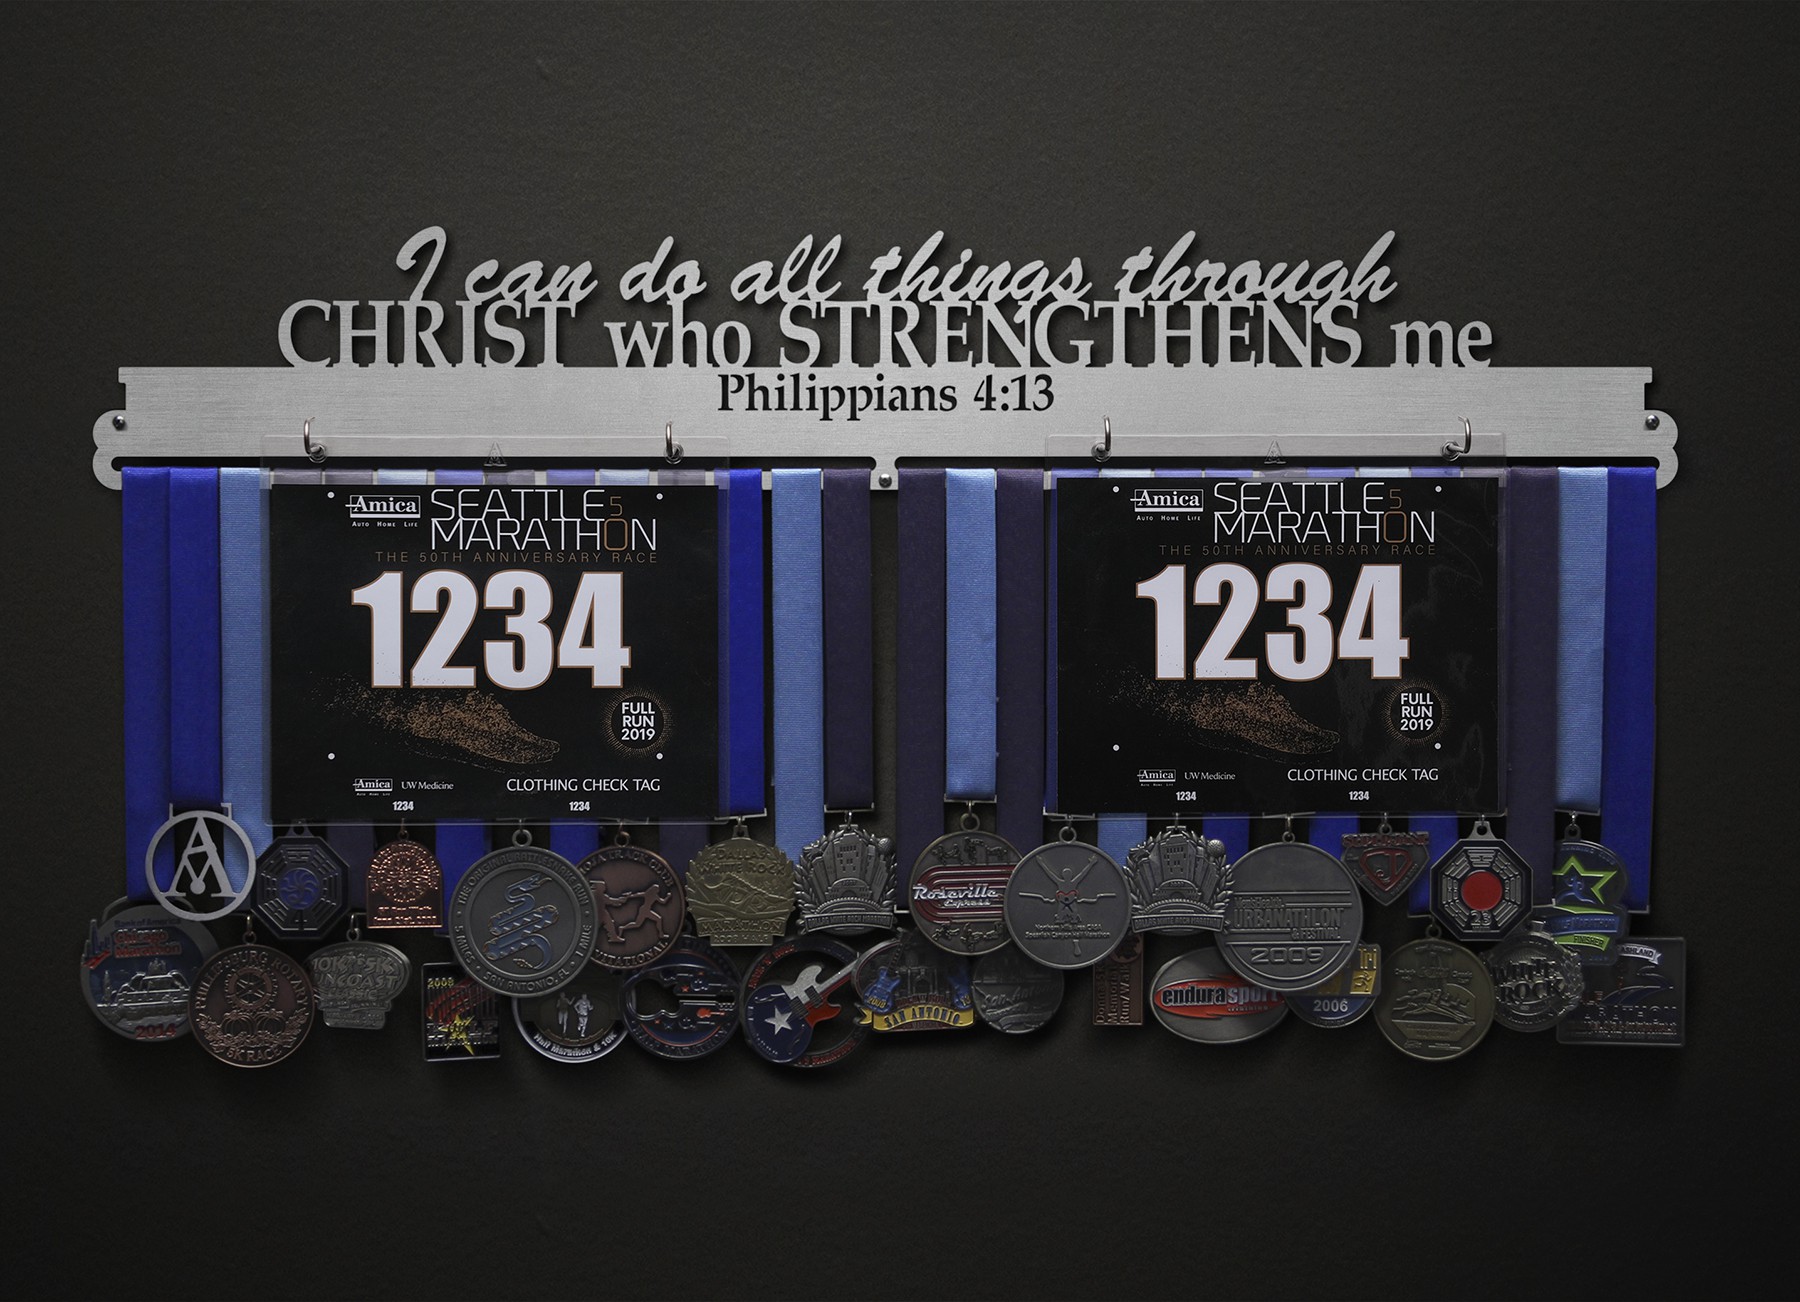 Philippians 4:13 Bib and Medal Display